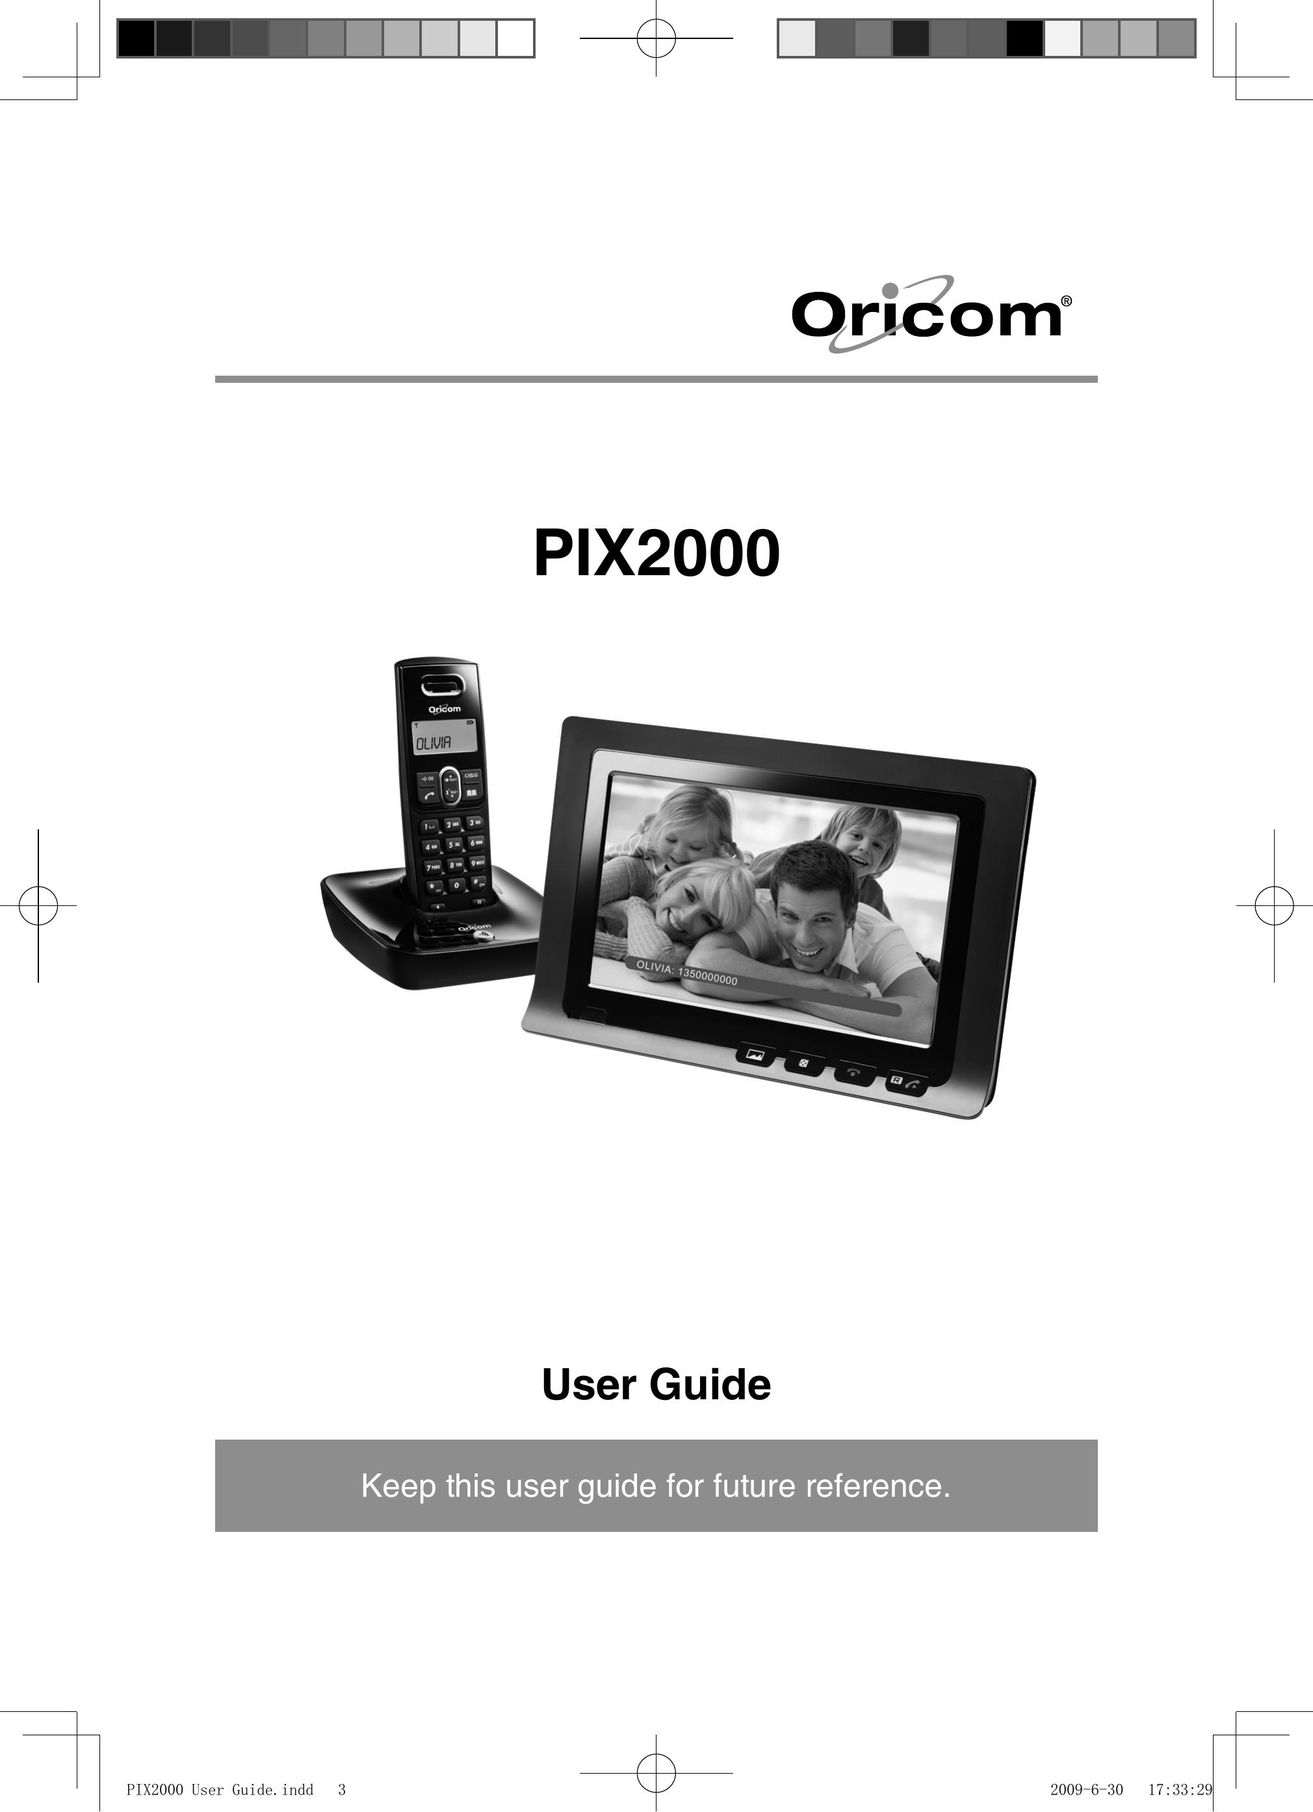 Oricom PIX2000 Cell Phone User Manual